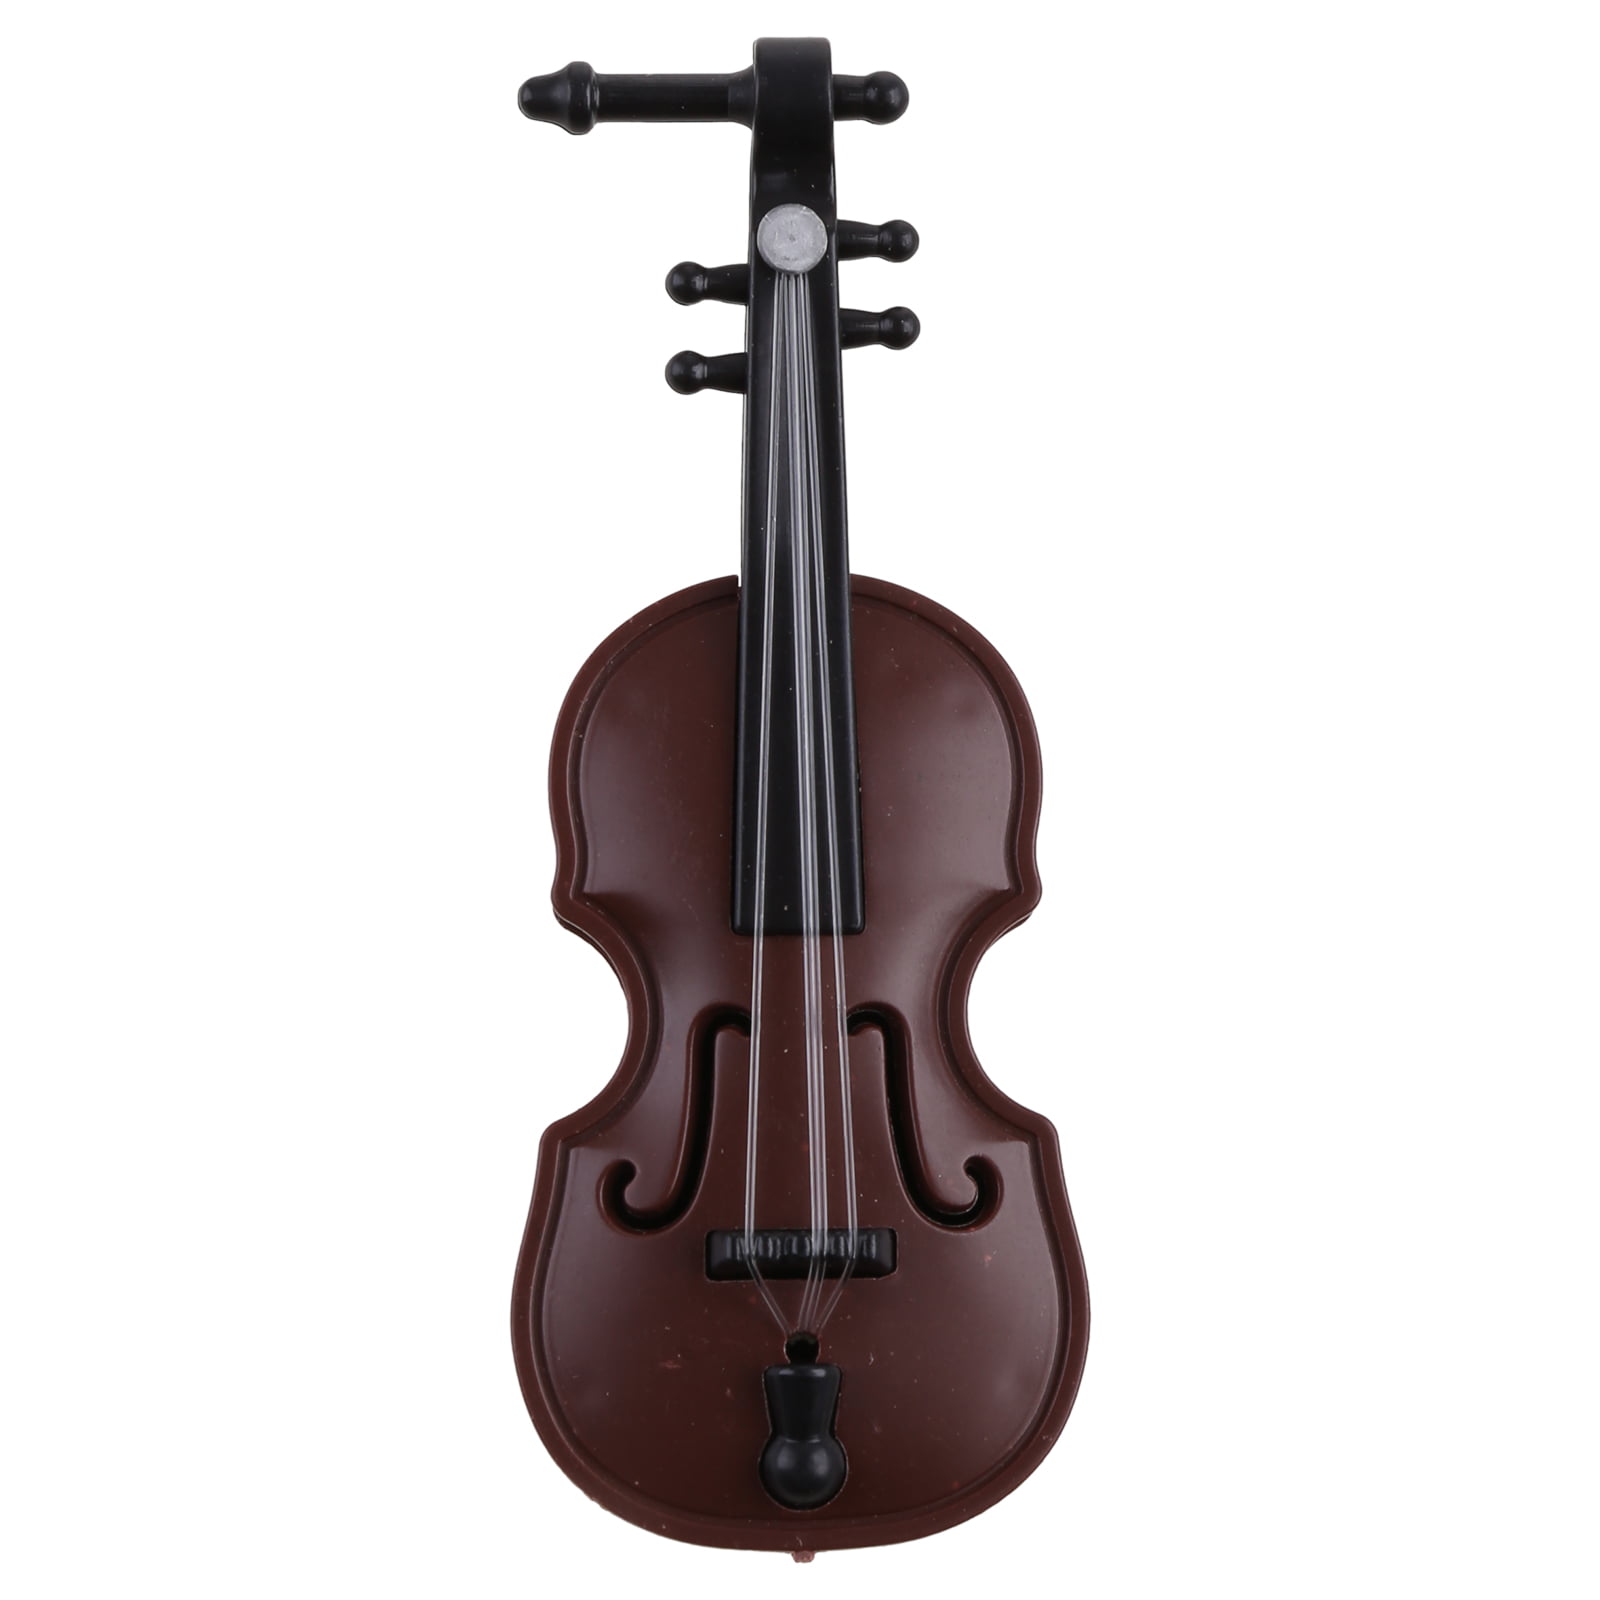 Dollhouse Miniature Musical Instrument Wood Cello Violin Decor Case Stand 1:12 